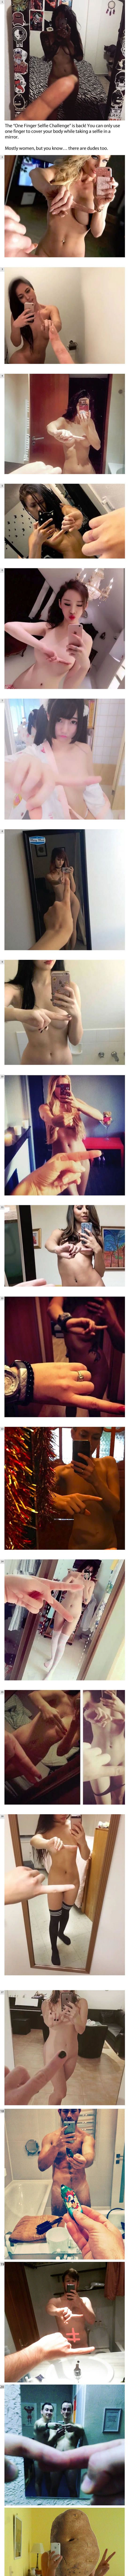 alex rochat recommends one finger selfie challenge pics pic